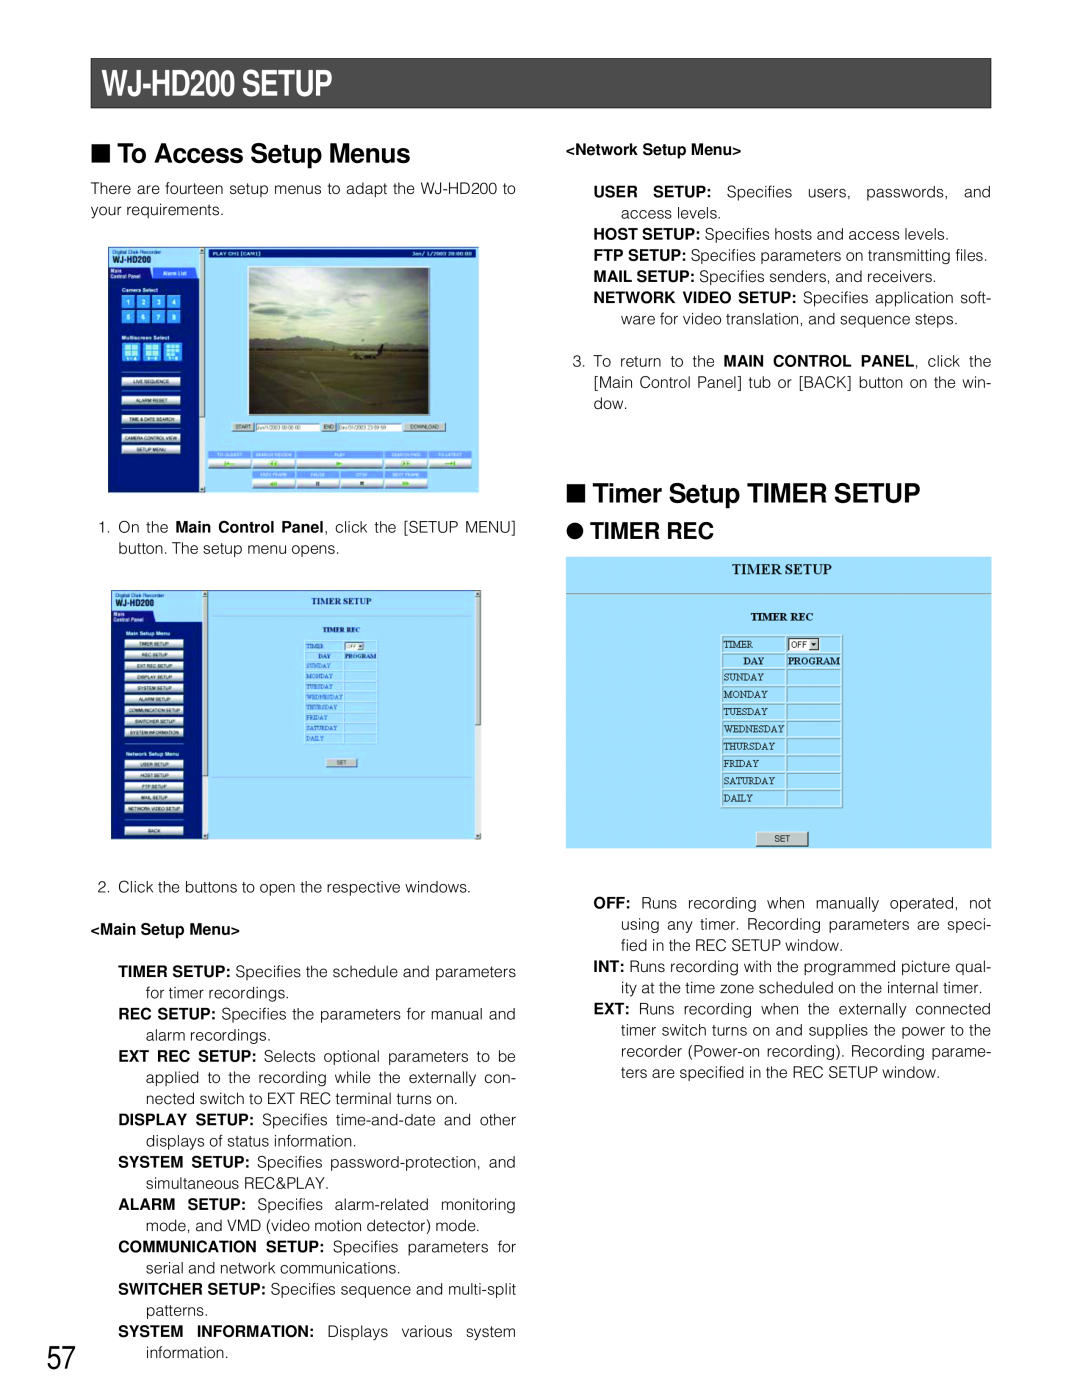 Panasonic manual WJ-HD200SETUP, To Access Setup Menus, Timer Setup TIMER SETUP, Timer Rec 